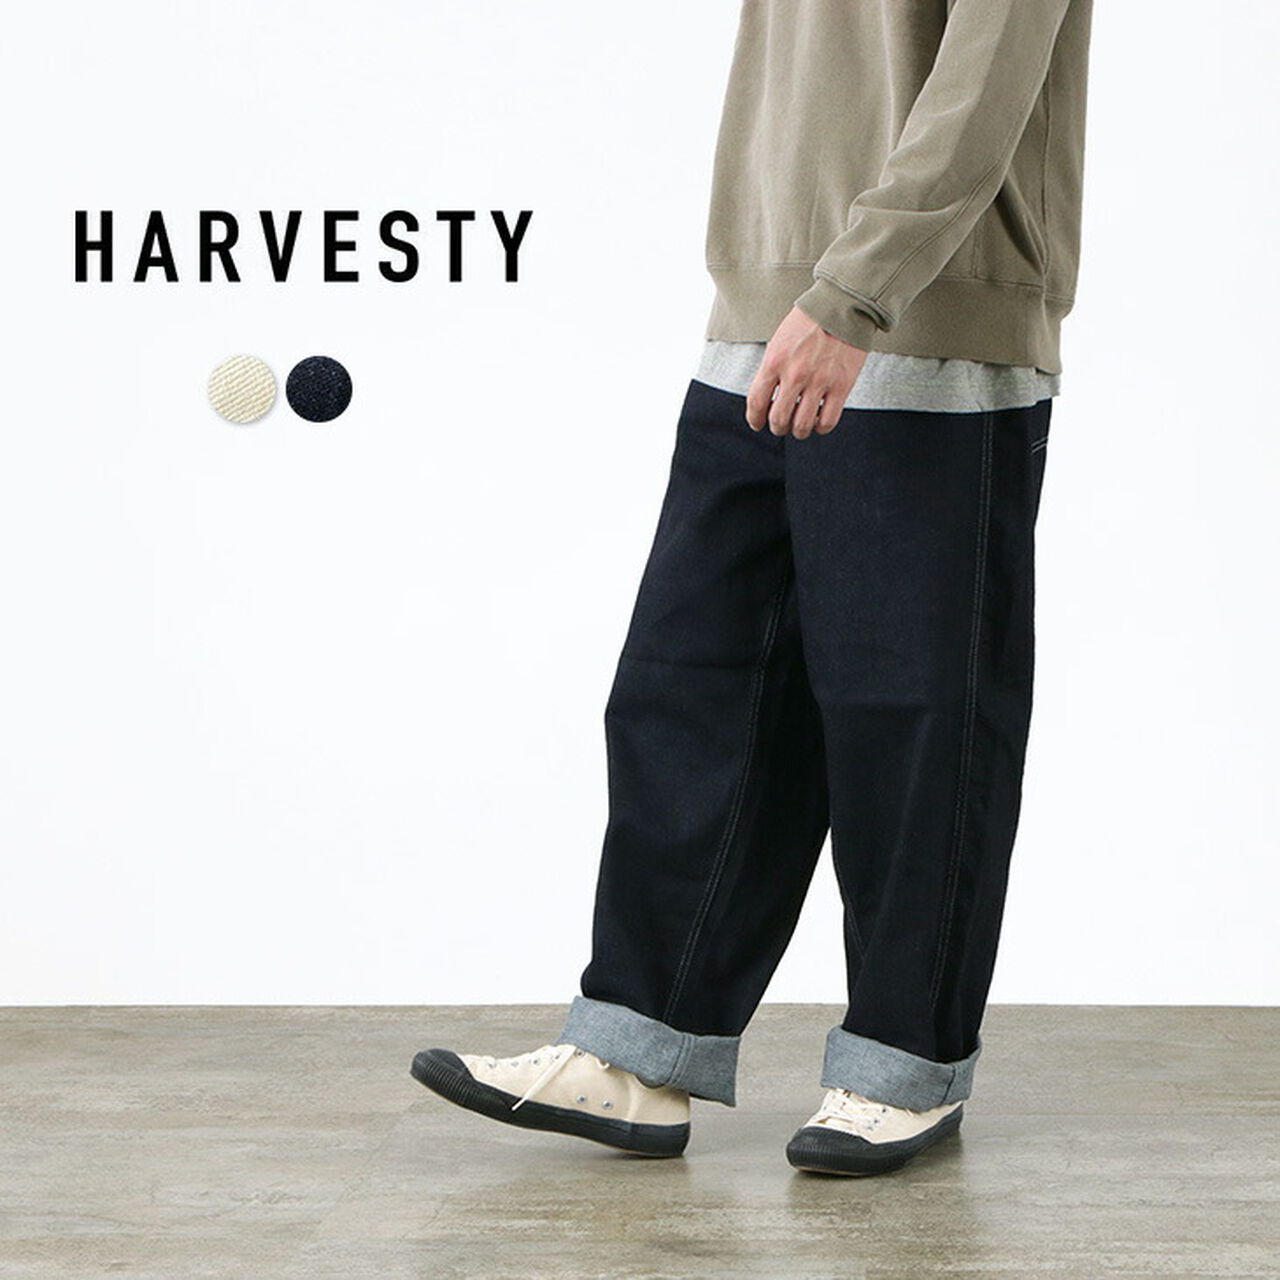 Harvesty painter pants